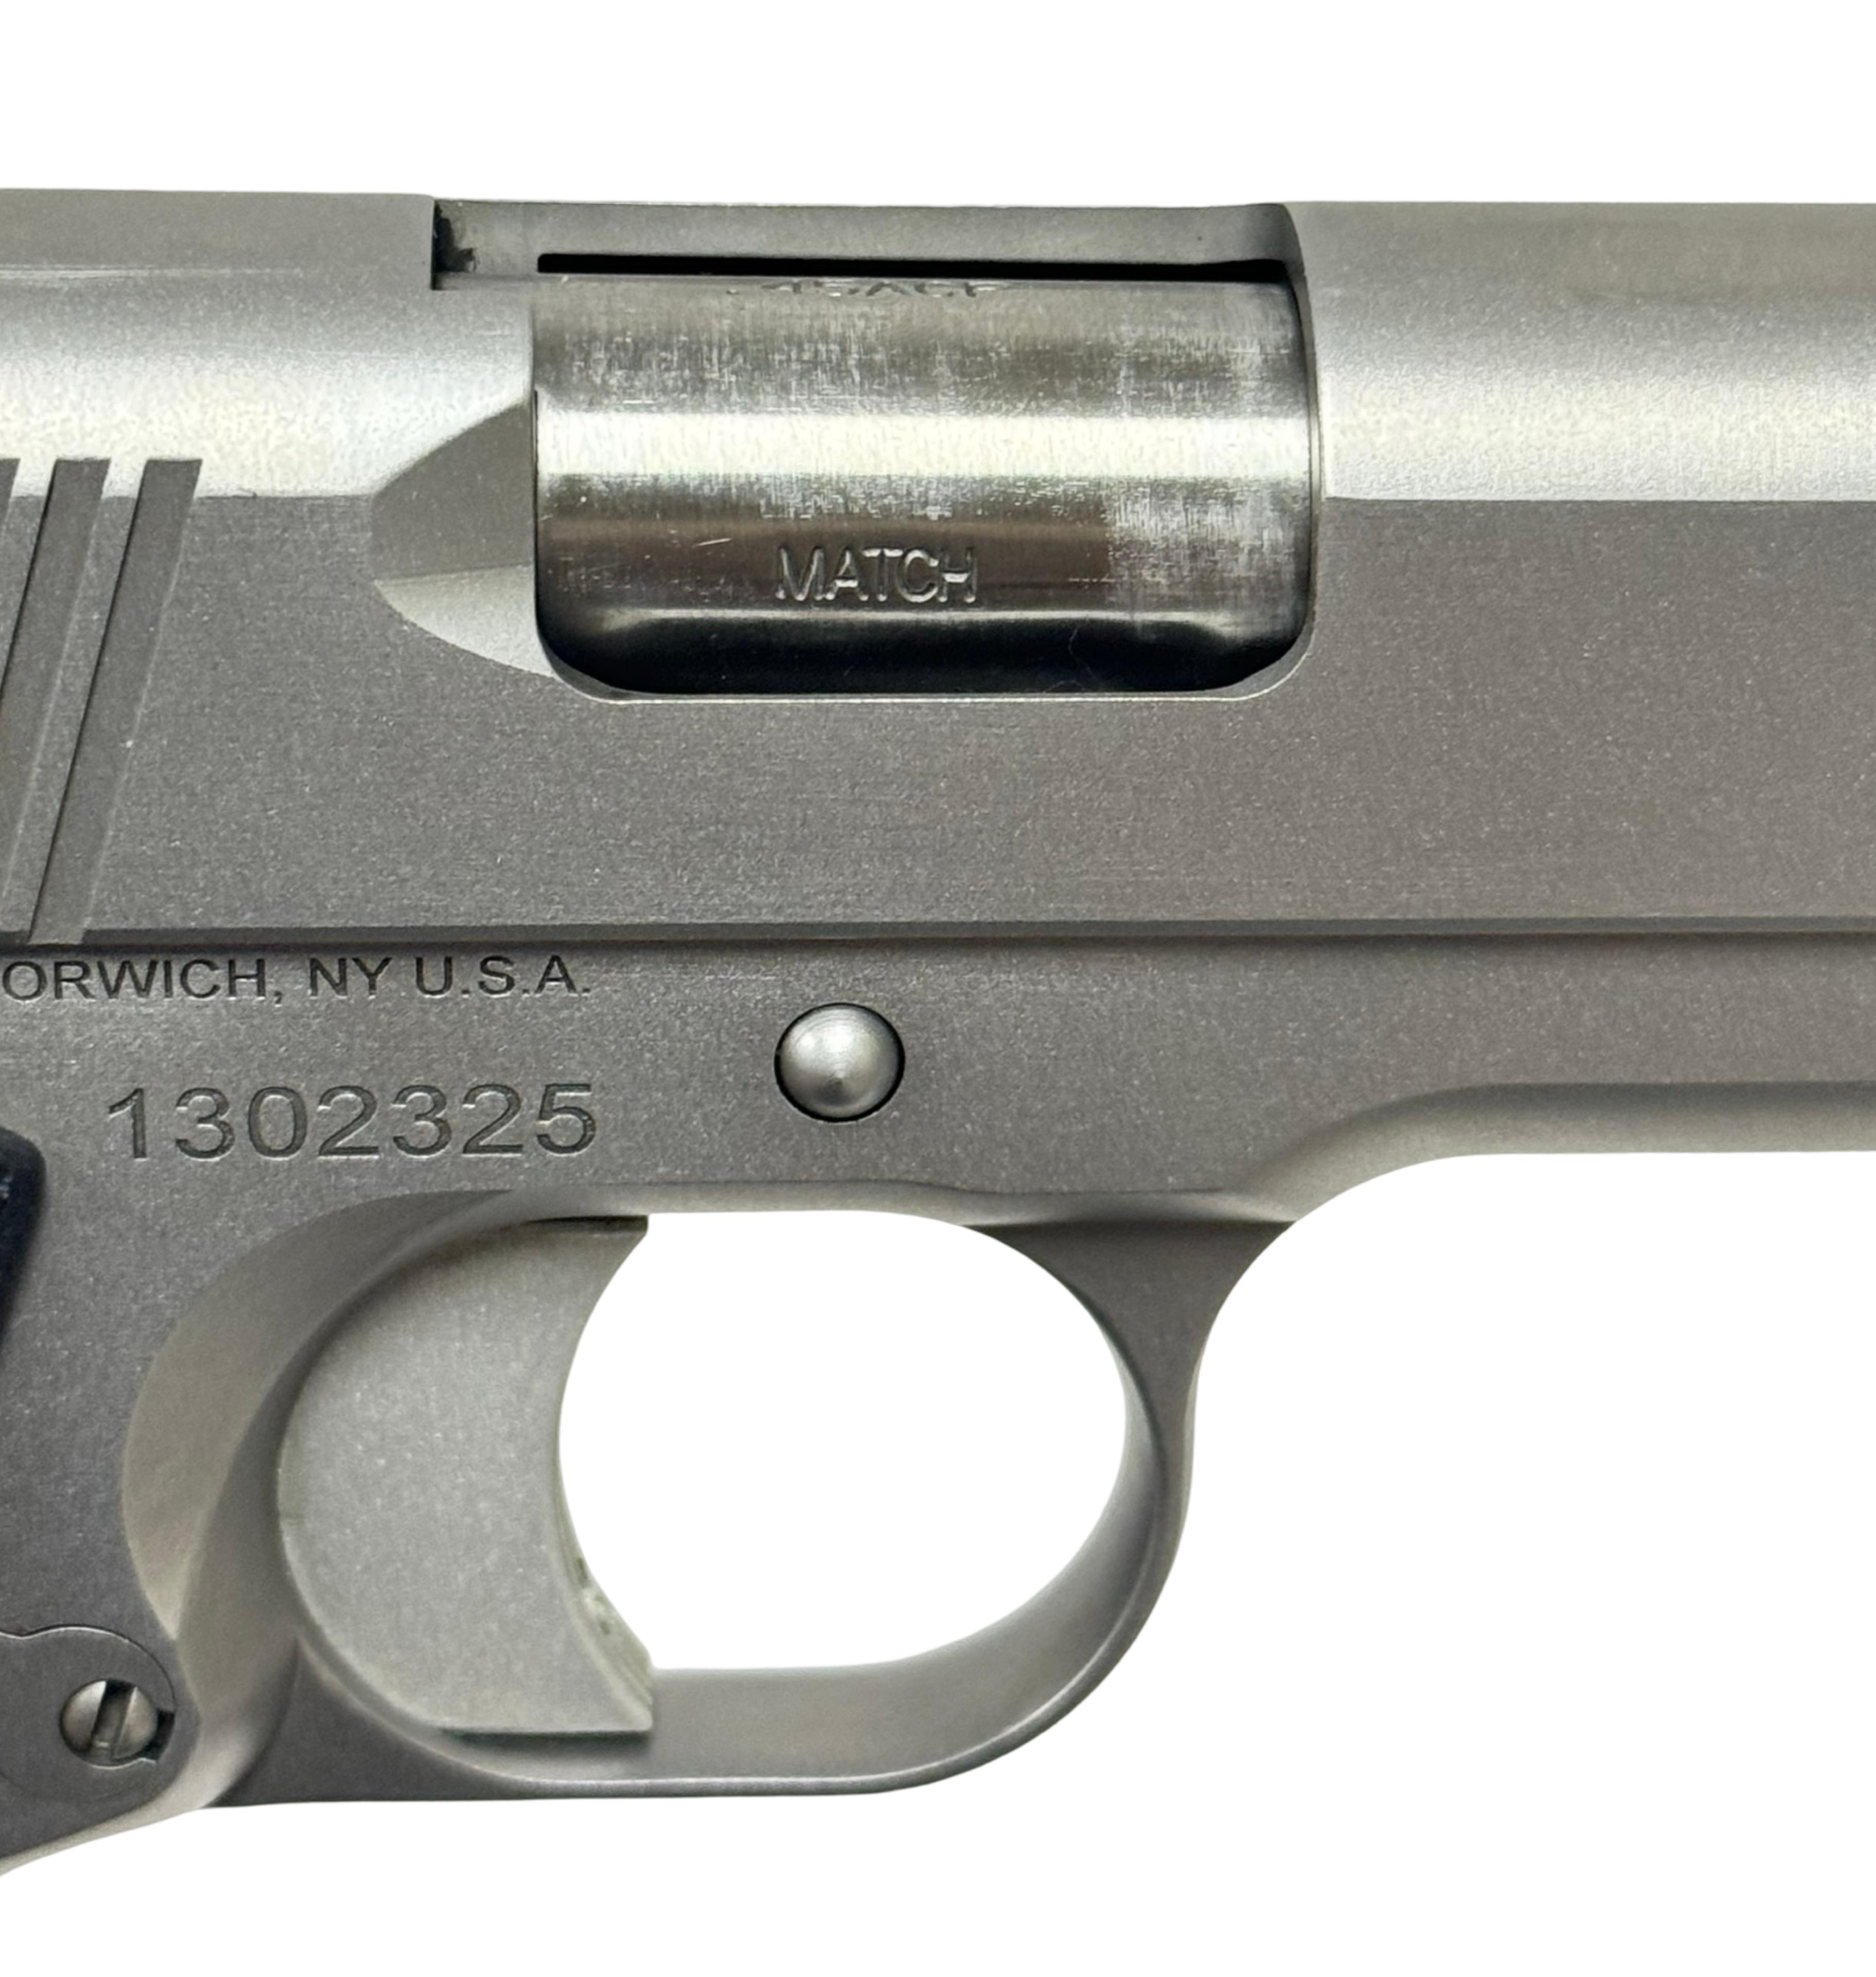 NIB Rare CZ / Dan Wesson Valor 1911 Stainless Steel .45 ACP Semi-Automatic Pistol with (3) Magazines